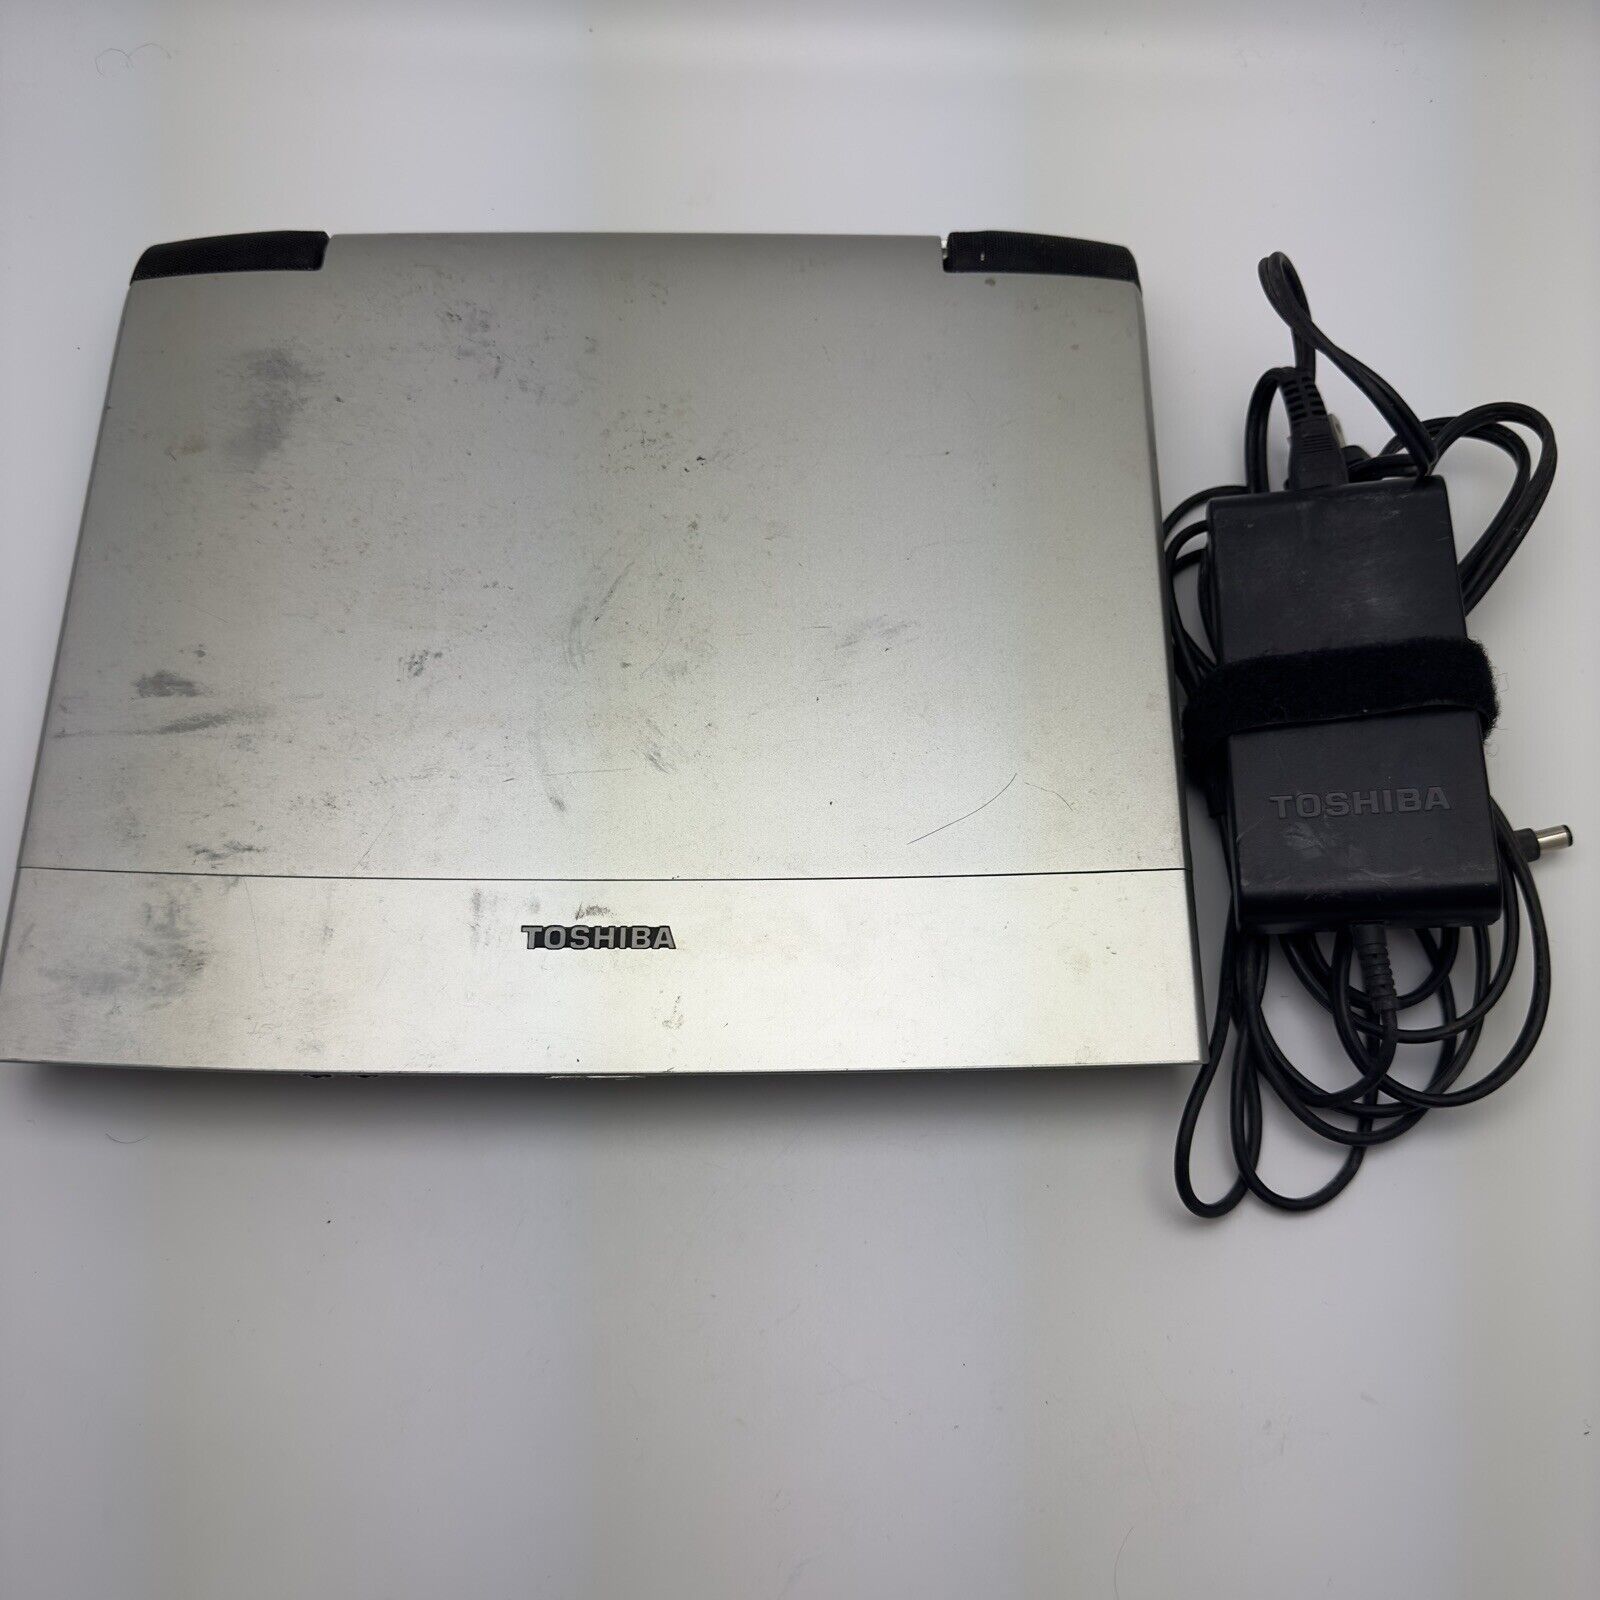 Uncleaned Toshiba Tecra9000 vintage RTS gamer Laptop Xp Retro P3 Pentium III 3